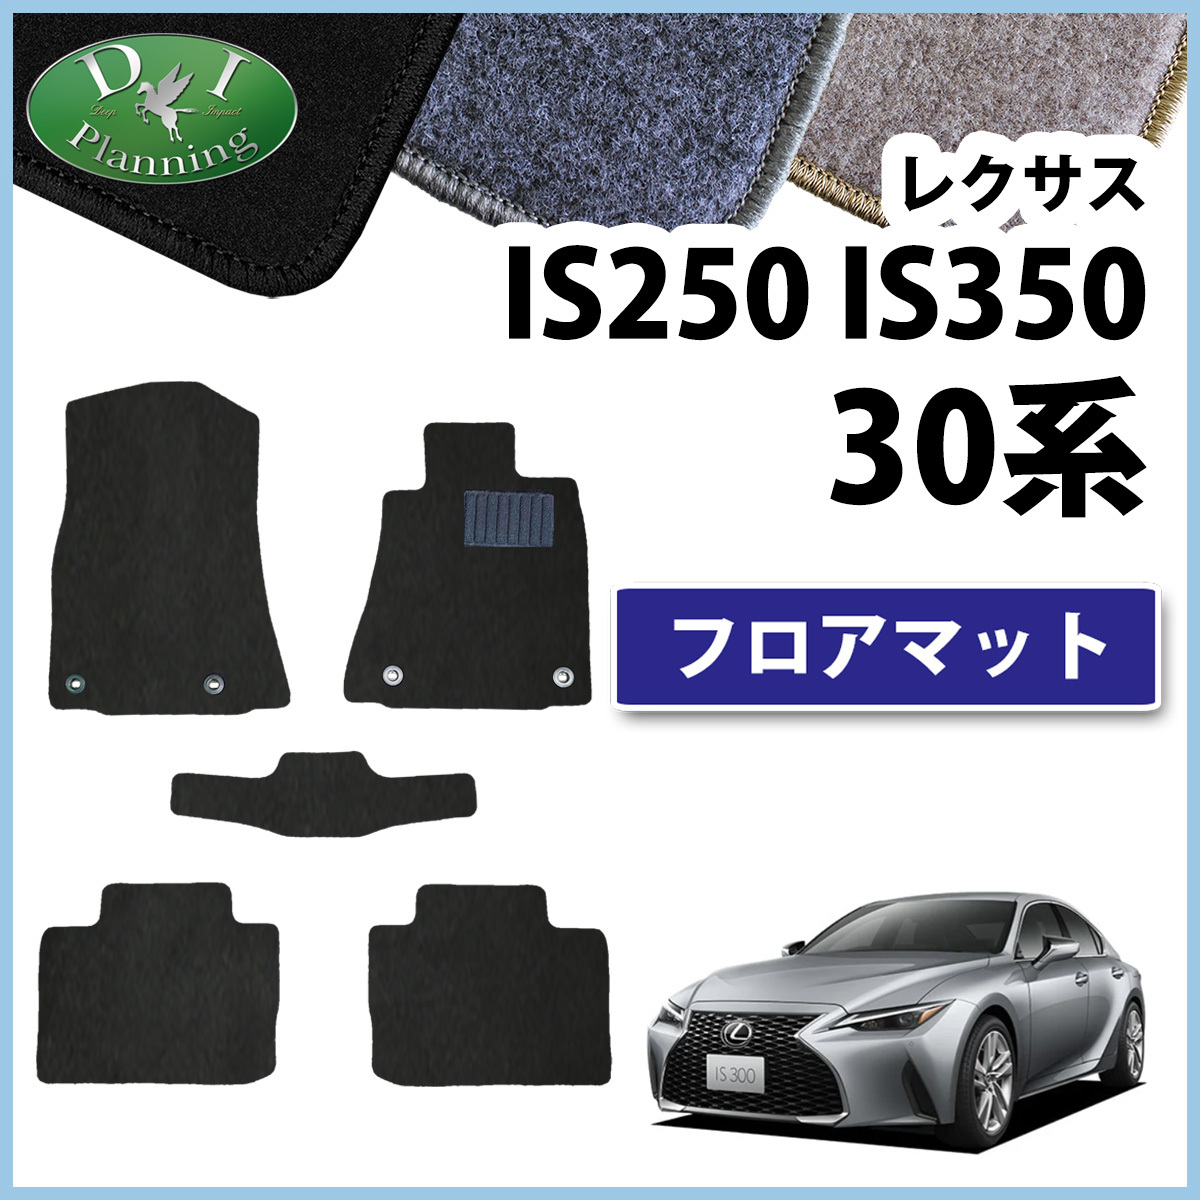  Lexus IS250 IS350 IS200t IS300h GSE30 ASE30 коврик на пол DX пол ковровое покрытие машина сопутствующие товары автомобиль детали 